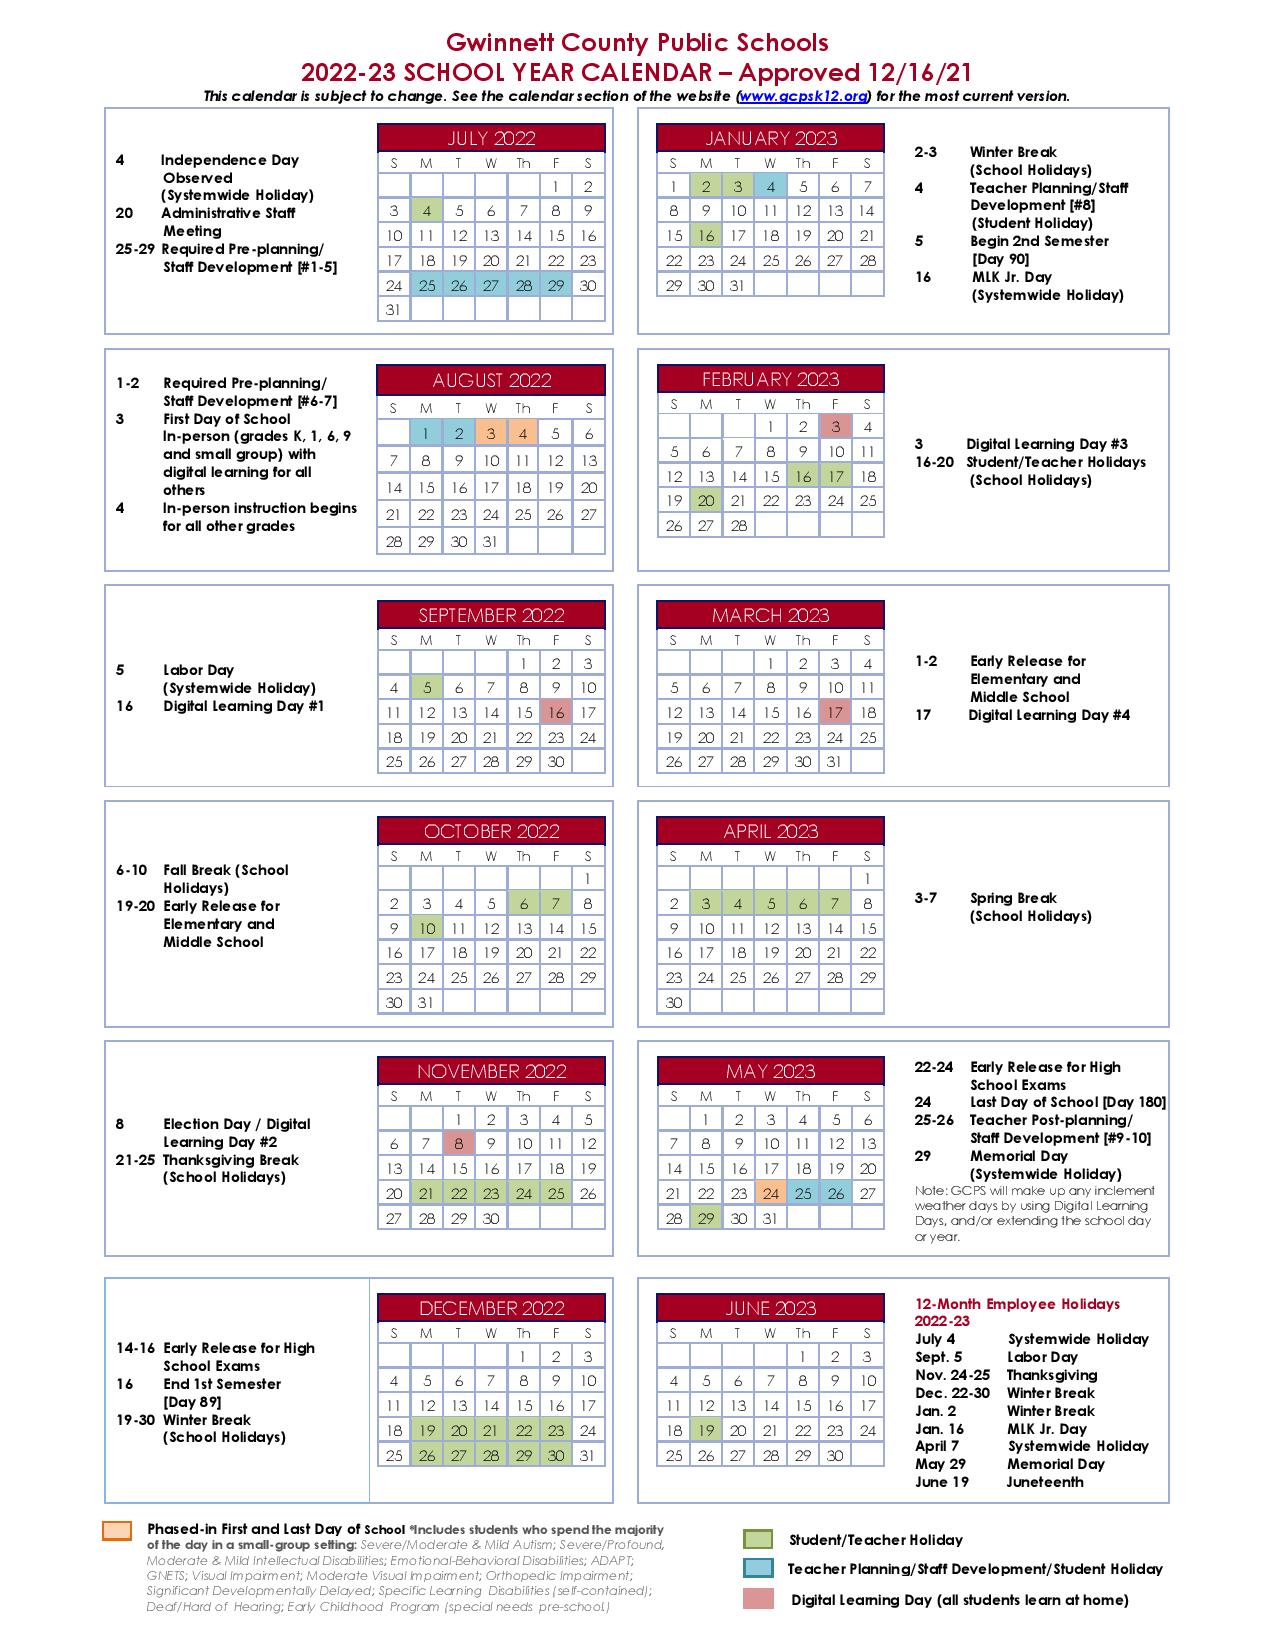 Gcu Fall 2023 Calendar - Printable Calendar 2023